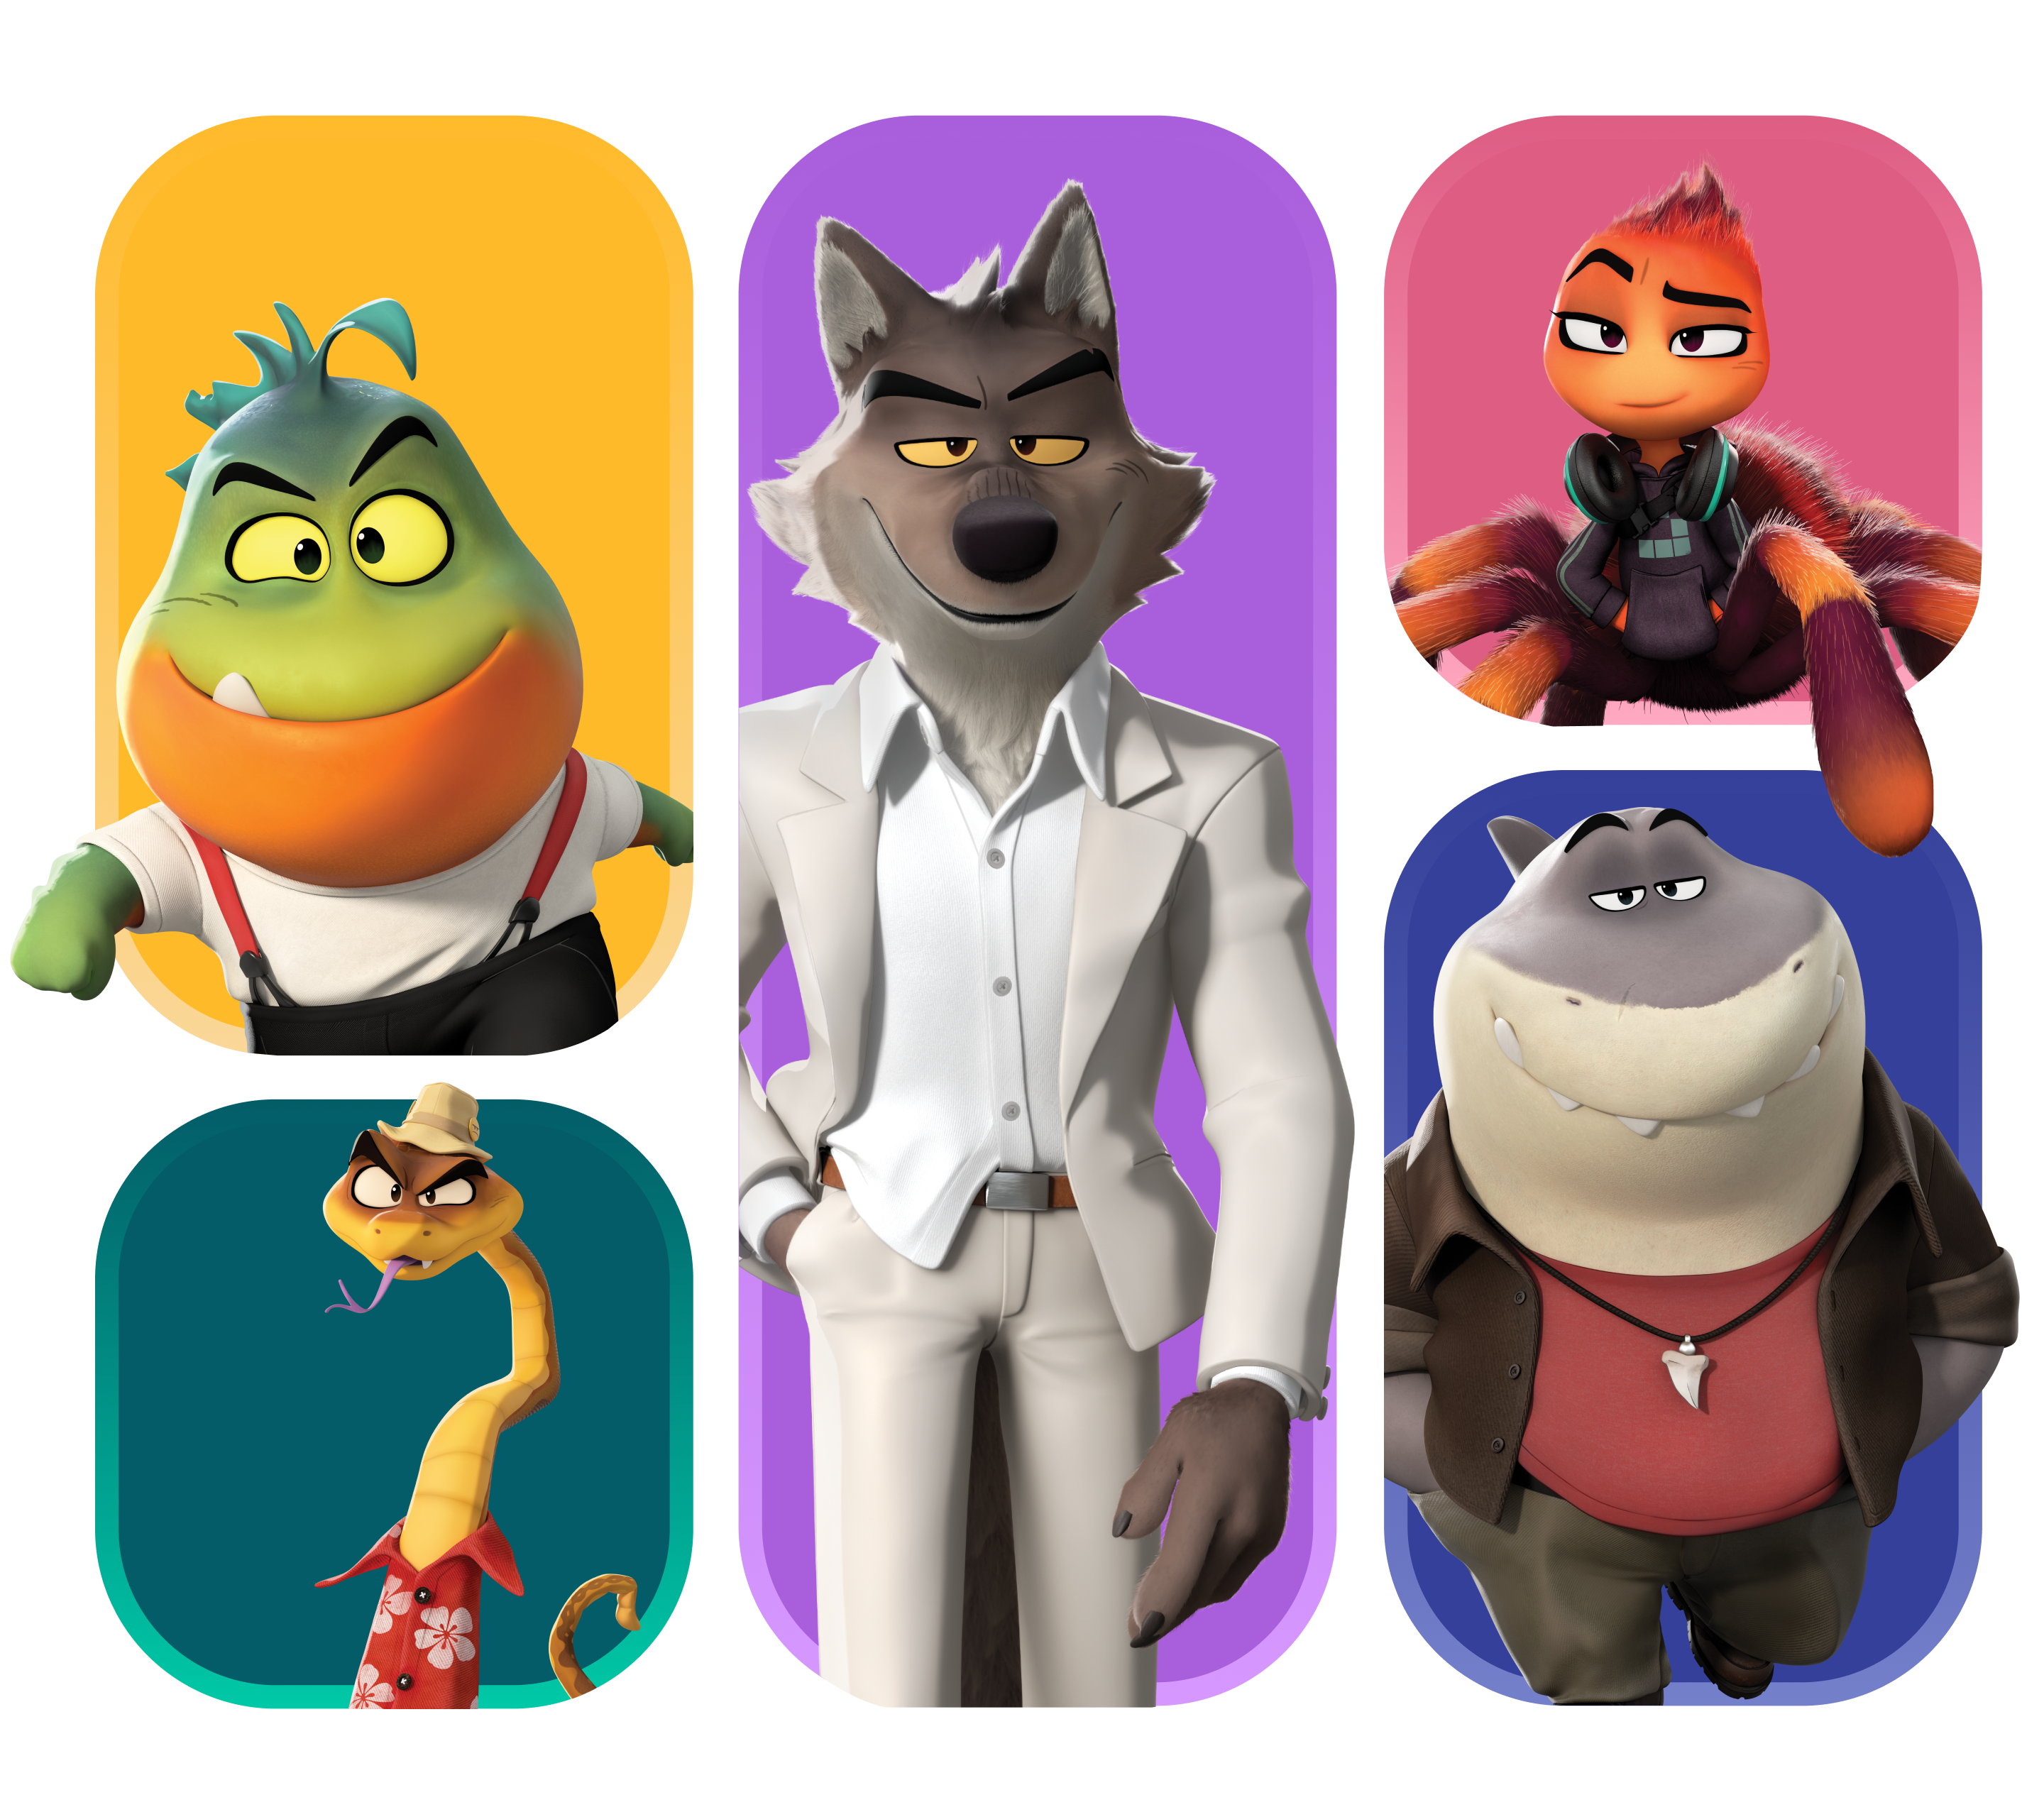 DreamWorks Bad Guys characters meet Greenlight.